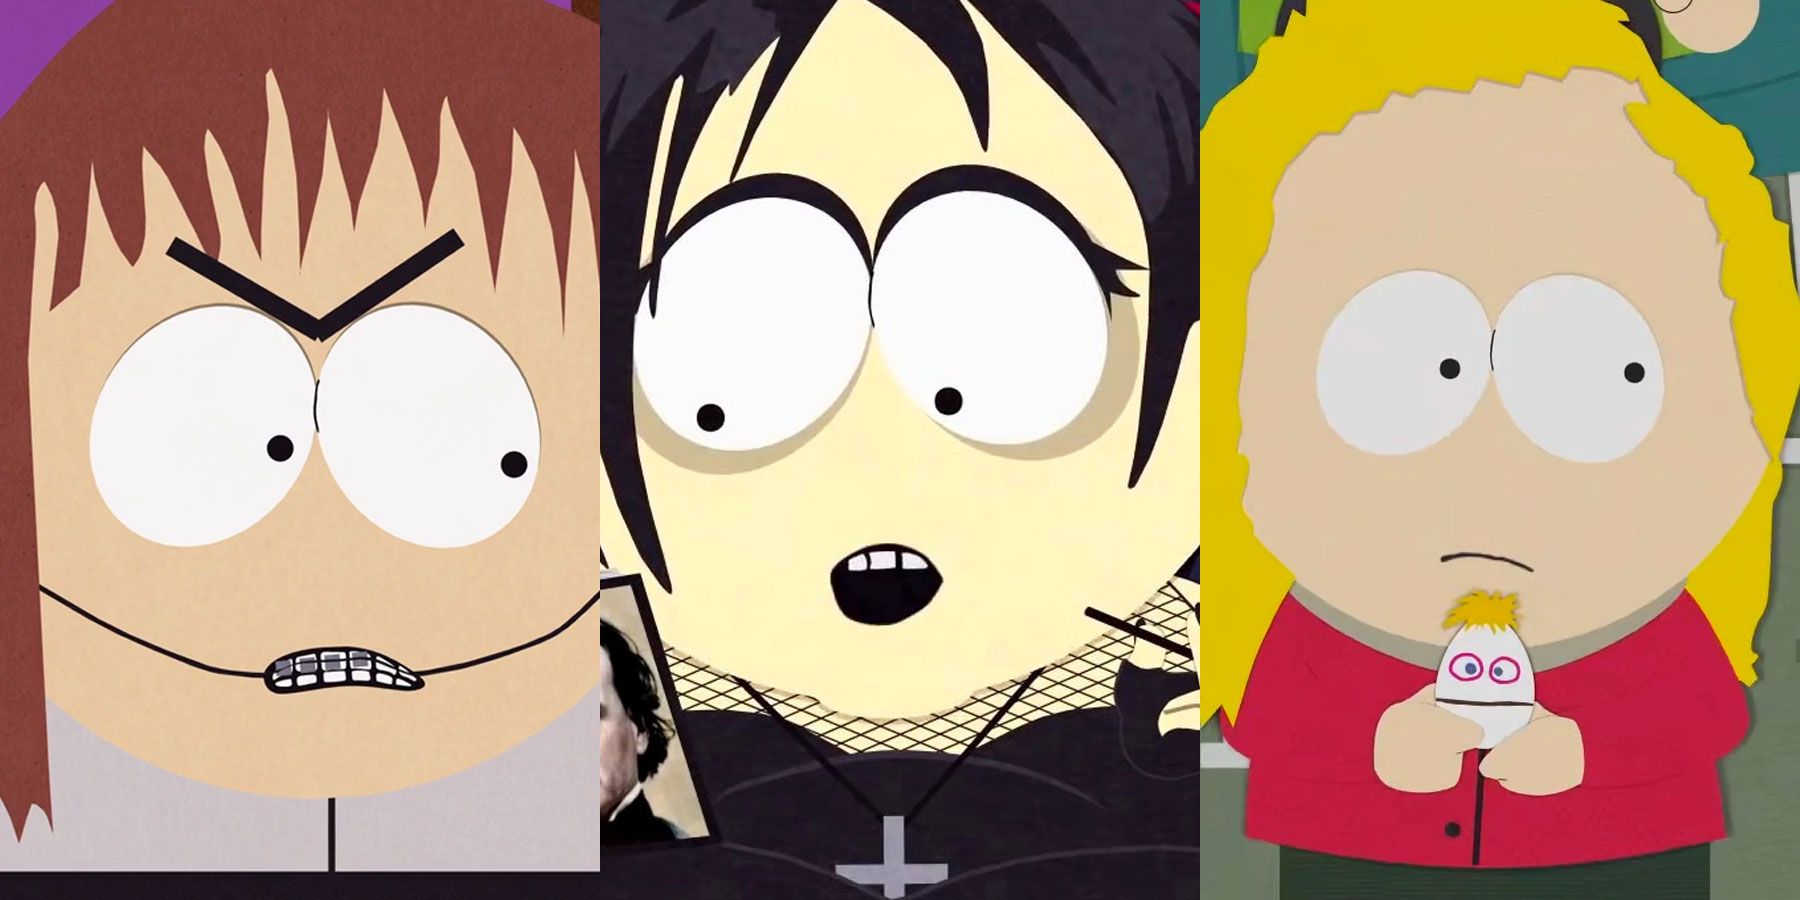 South Park Anime characters by Rainicorn-Kyandei on DeviantArt